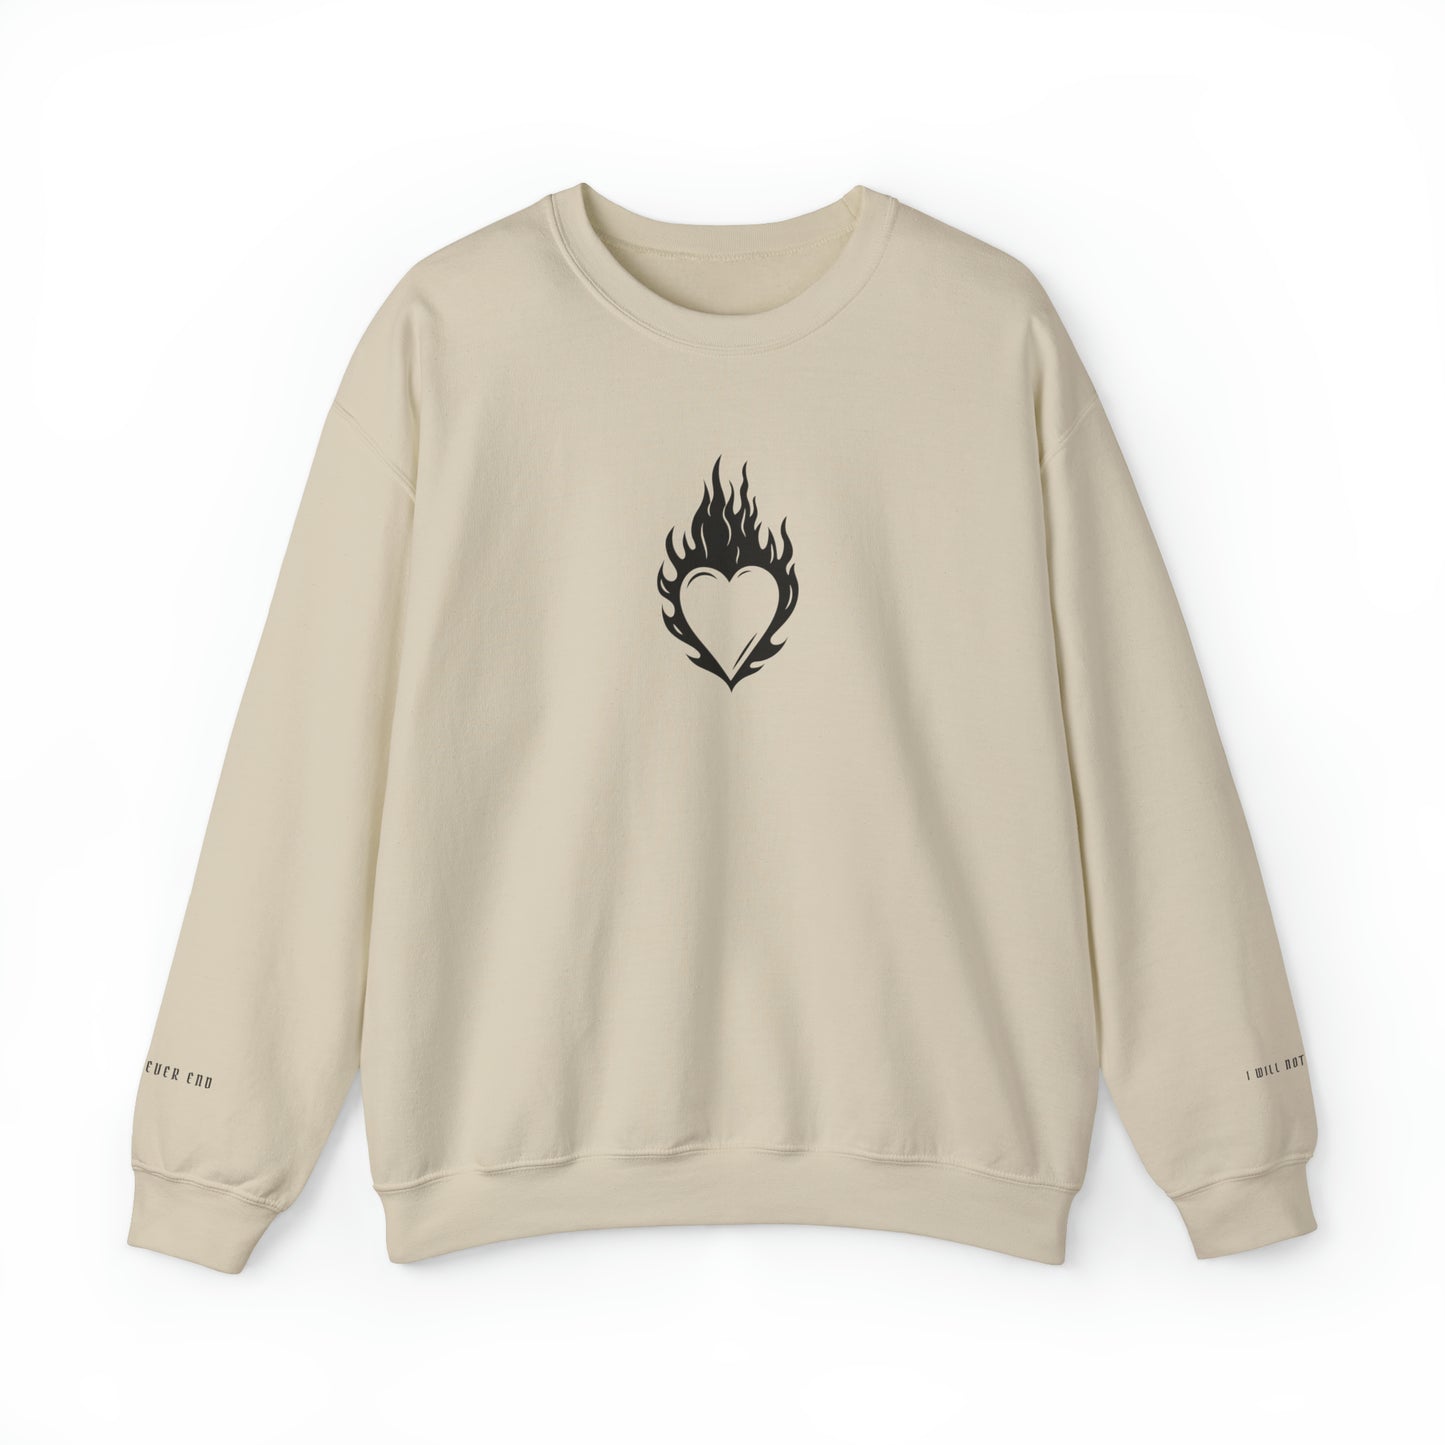 Fire Heart Crewneck Sweatshirt, Throne of Glass